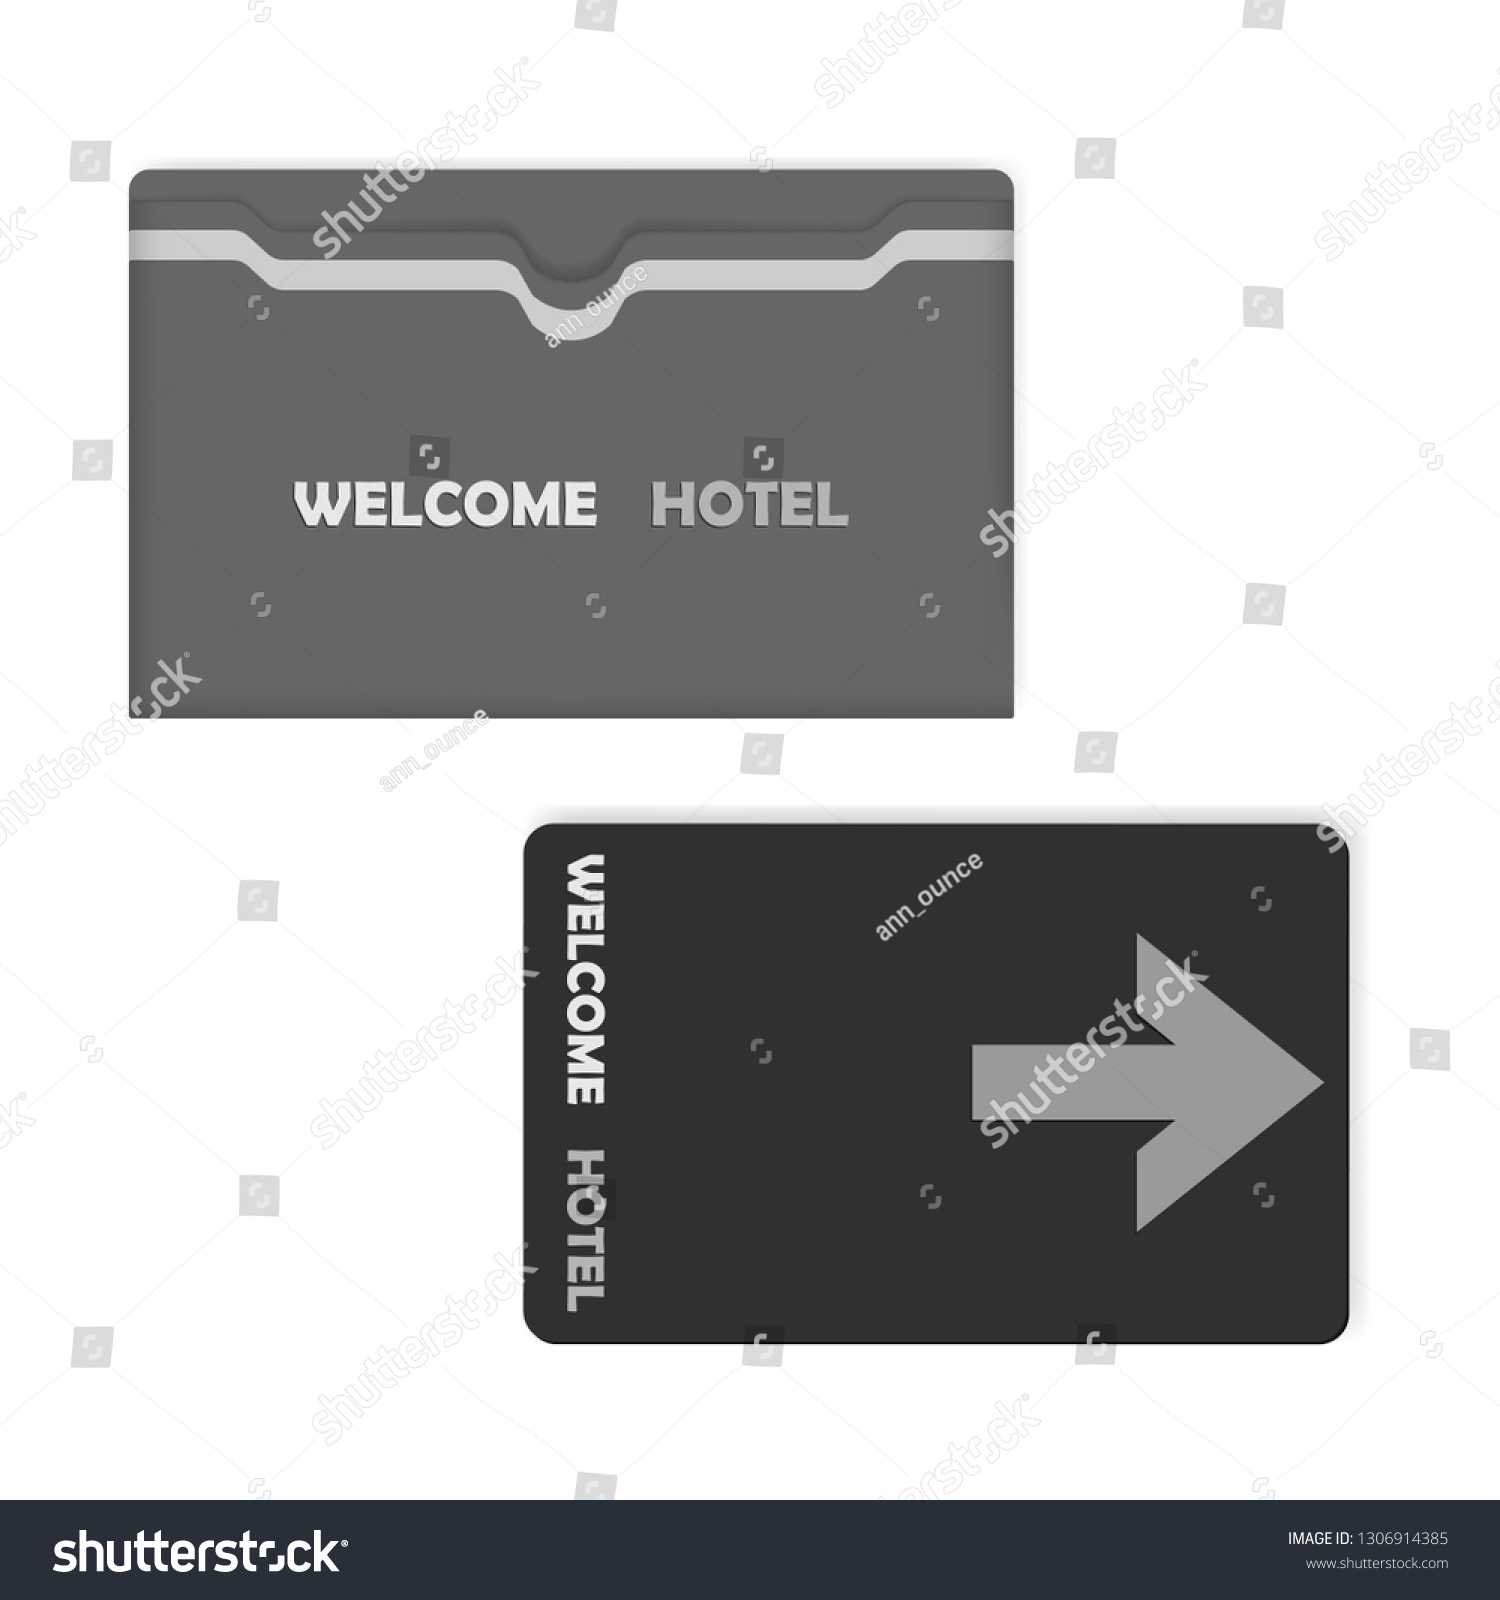 Стоковая Векторная Графика «Hotel Key Card Keycard Sleeve Inside Hotel Key Card Template